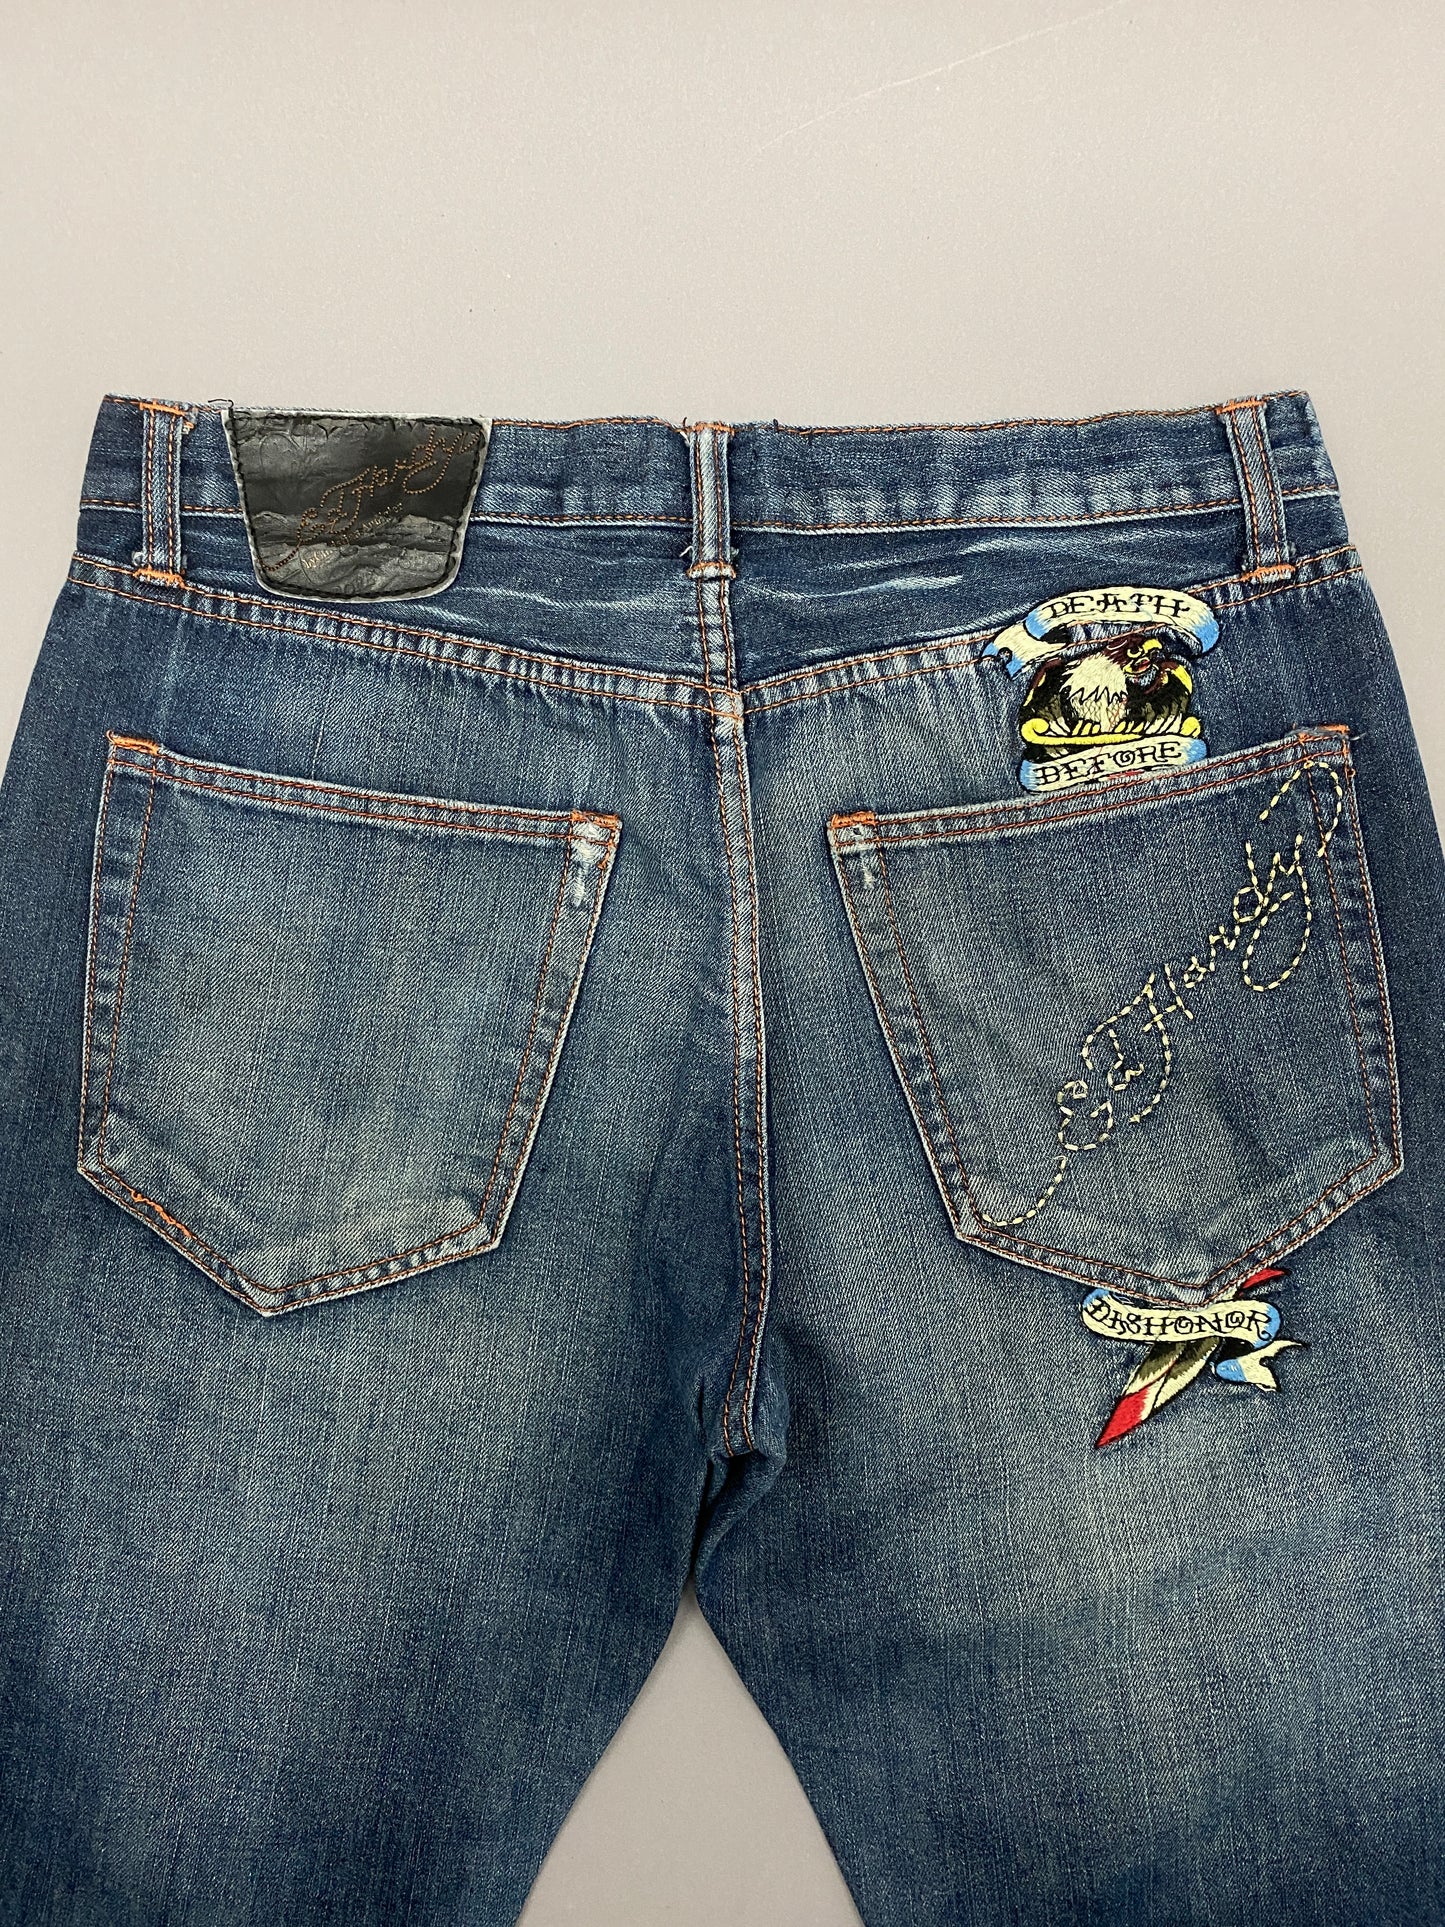 Jeans Ed Hardy Vintage - 32